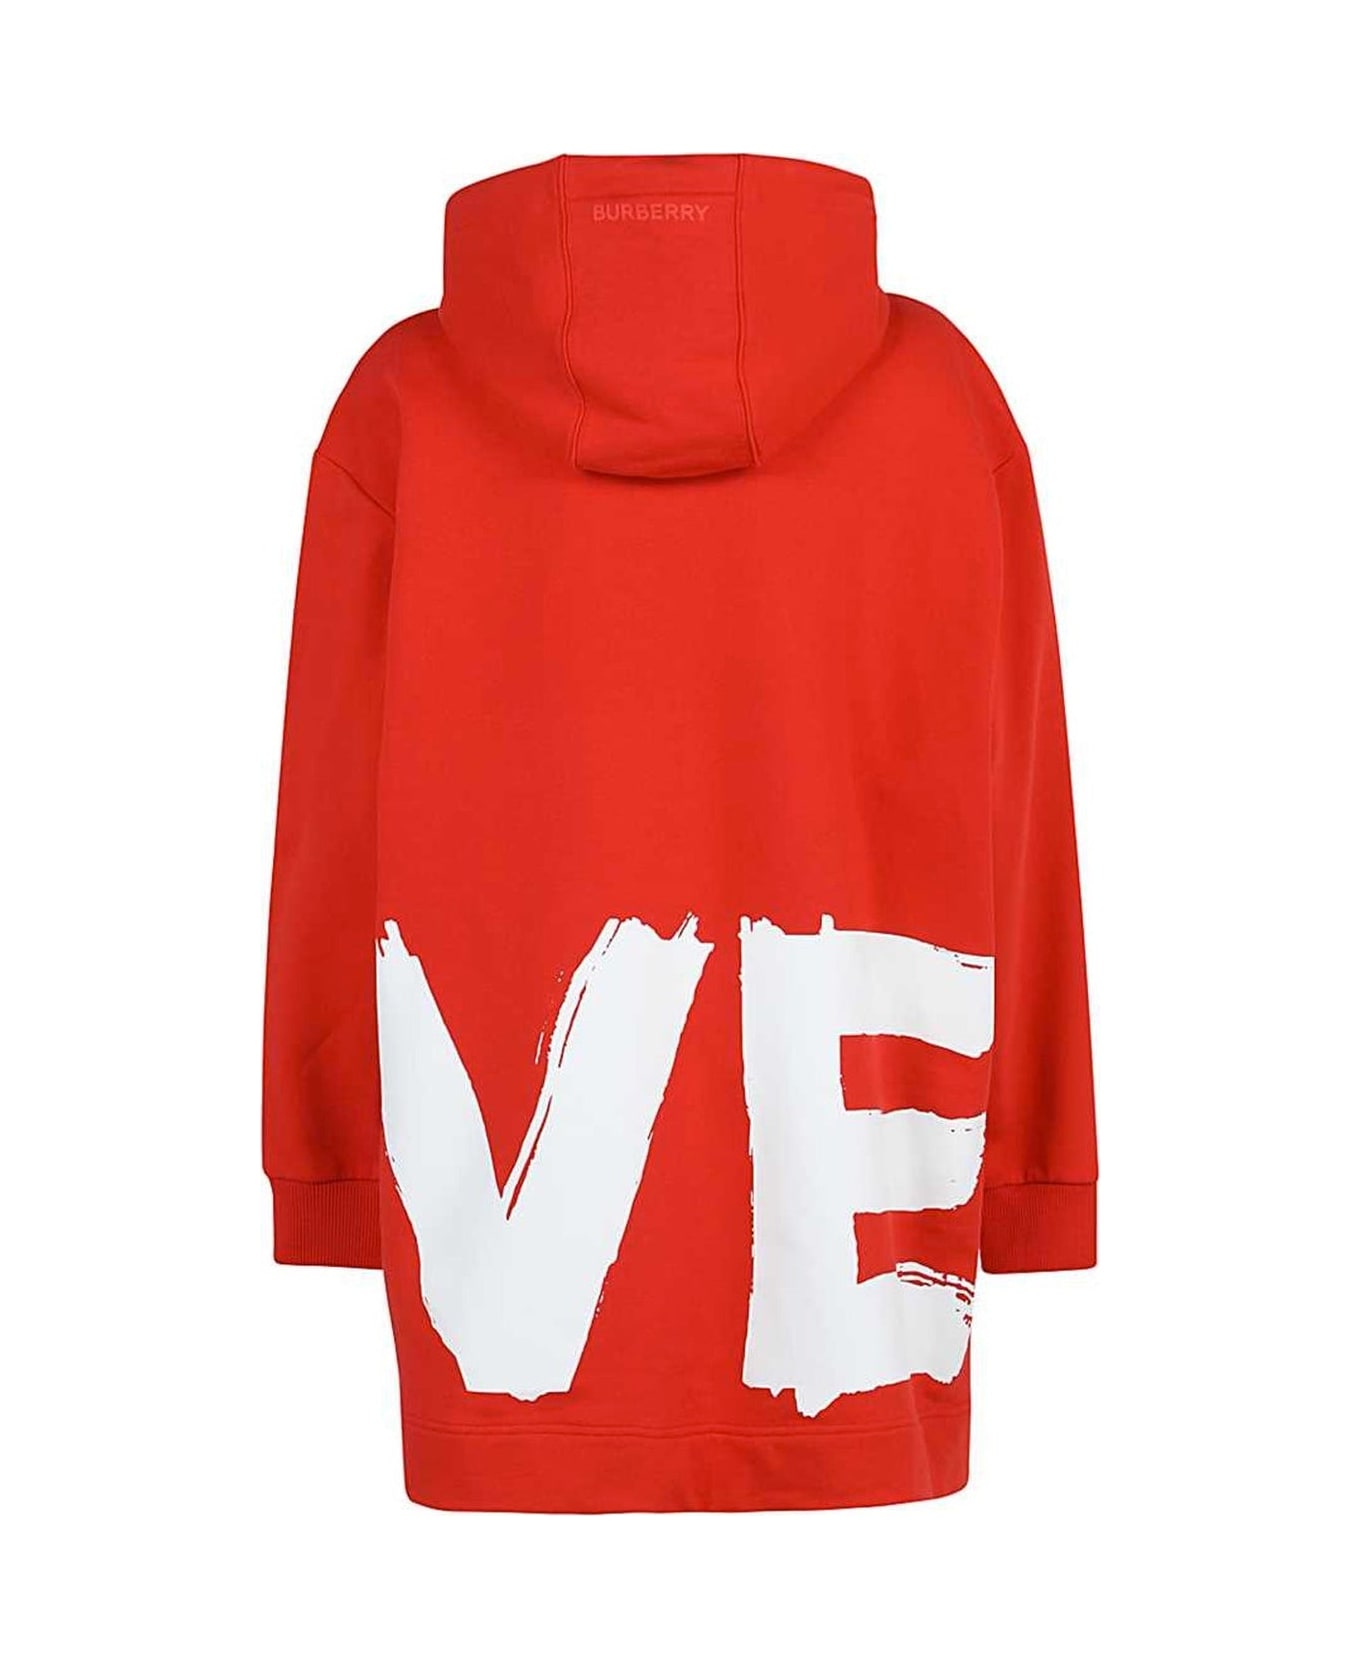 Burberry Love Hooded Sweatshirt - Red